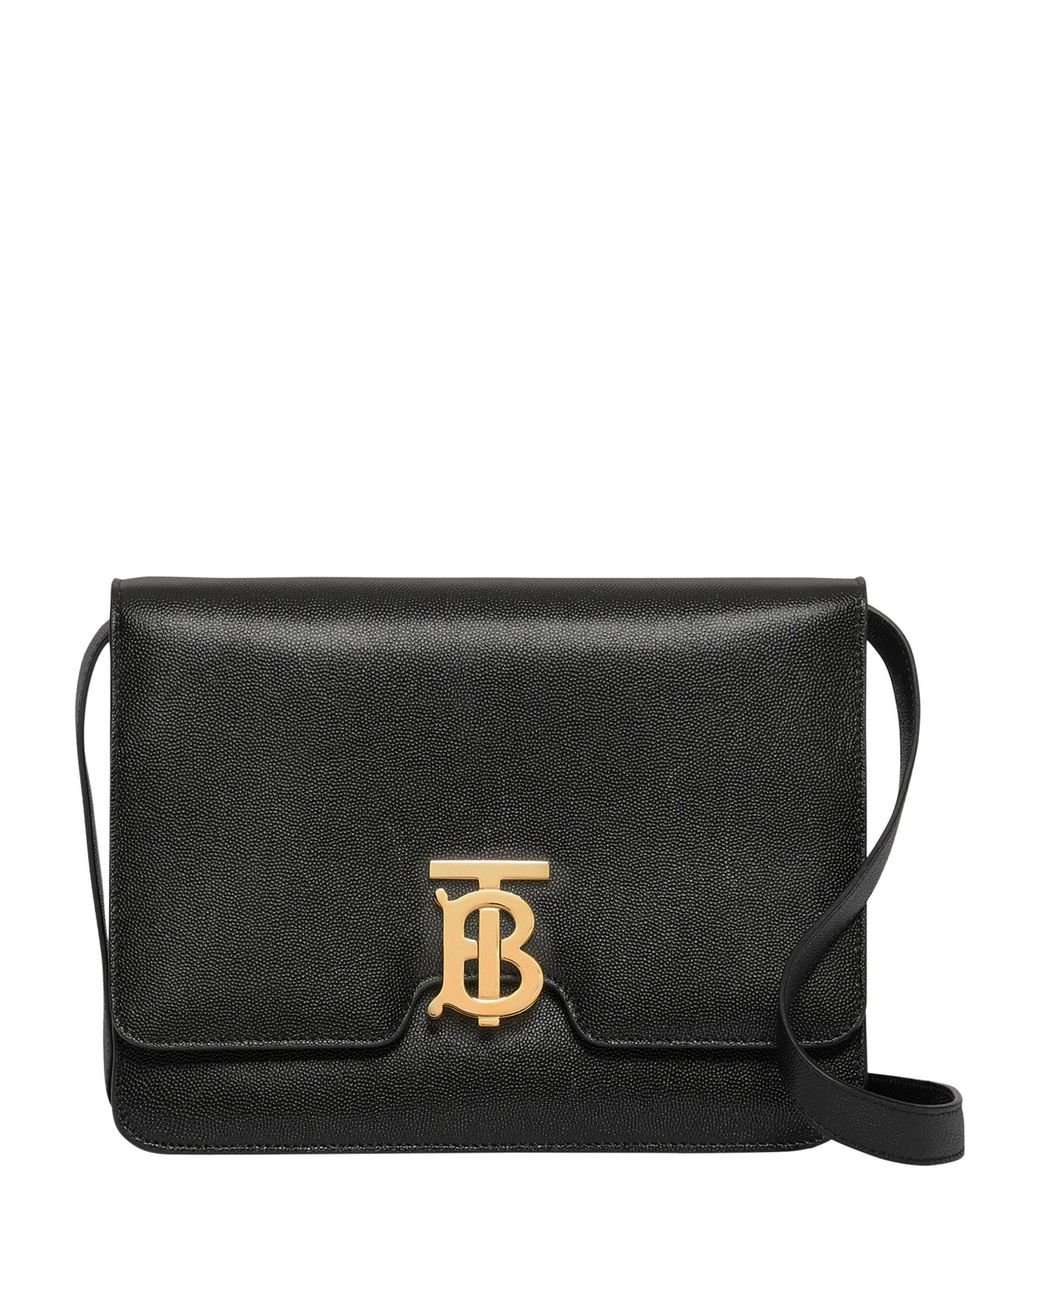 Burberry Leather Tb Cross-body Bag in Black - Lyst